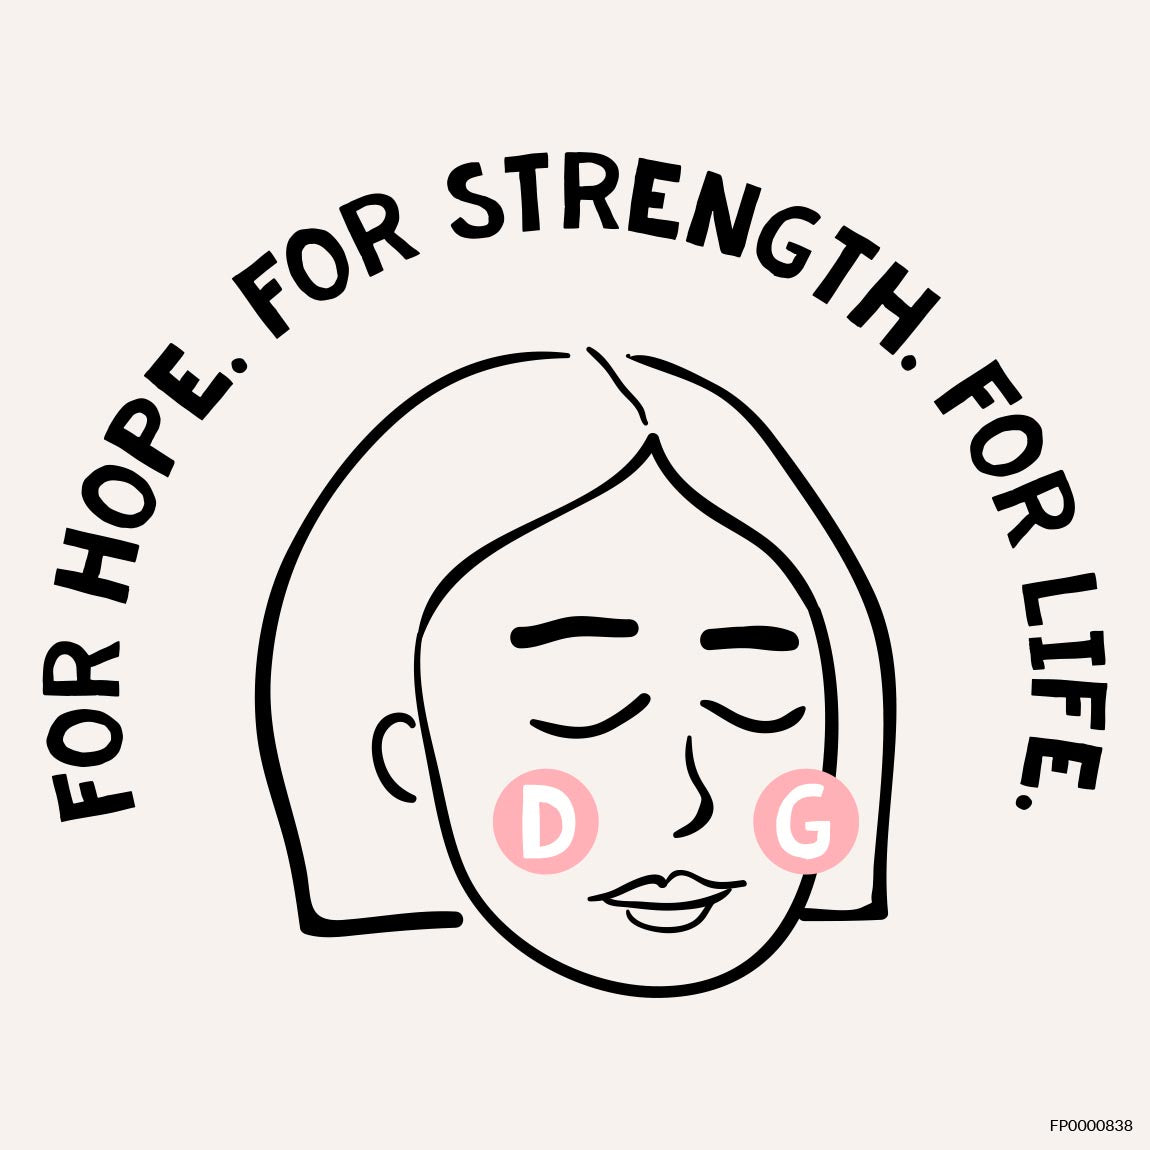 Hope, Strength, Life